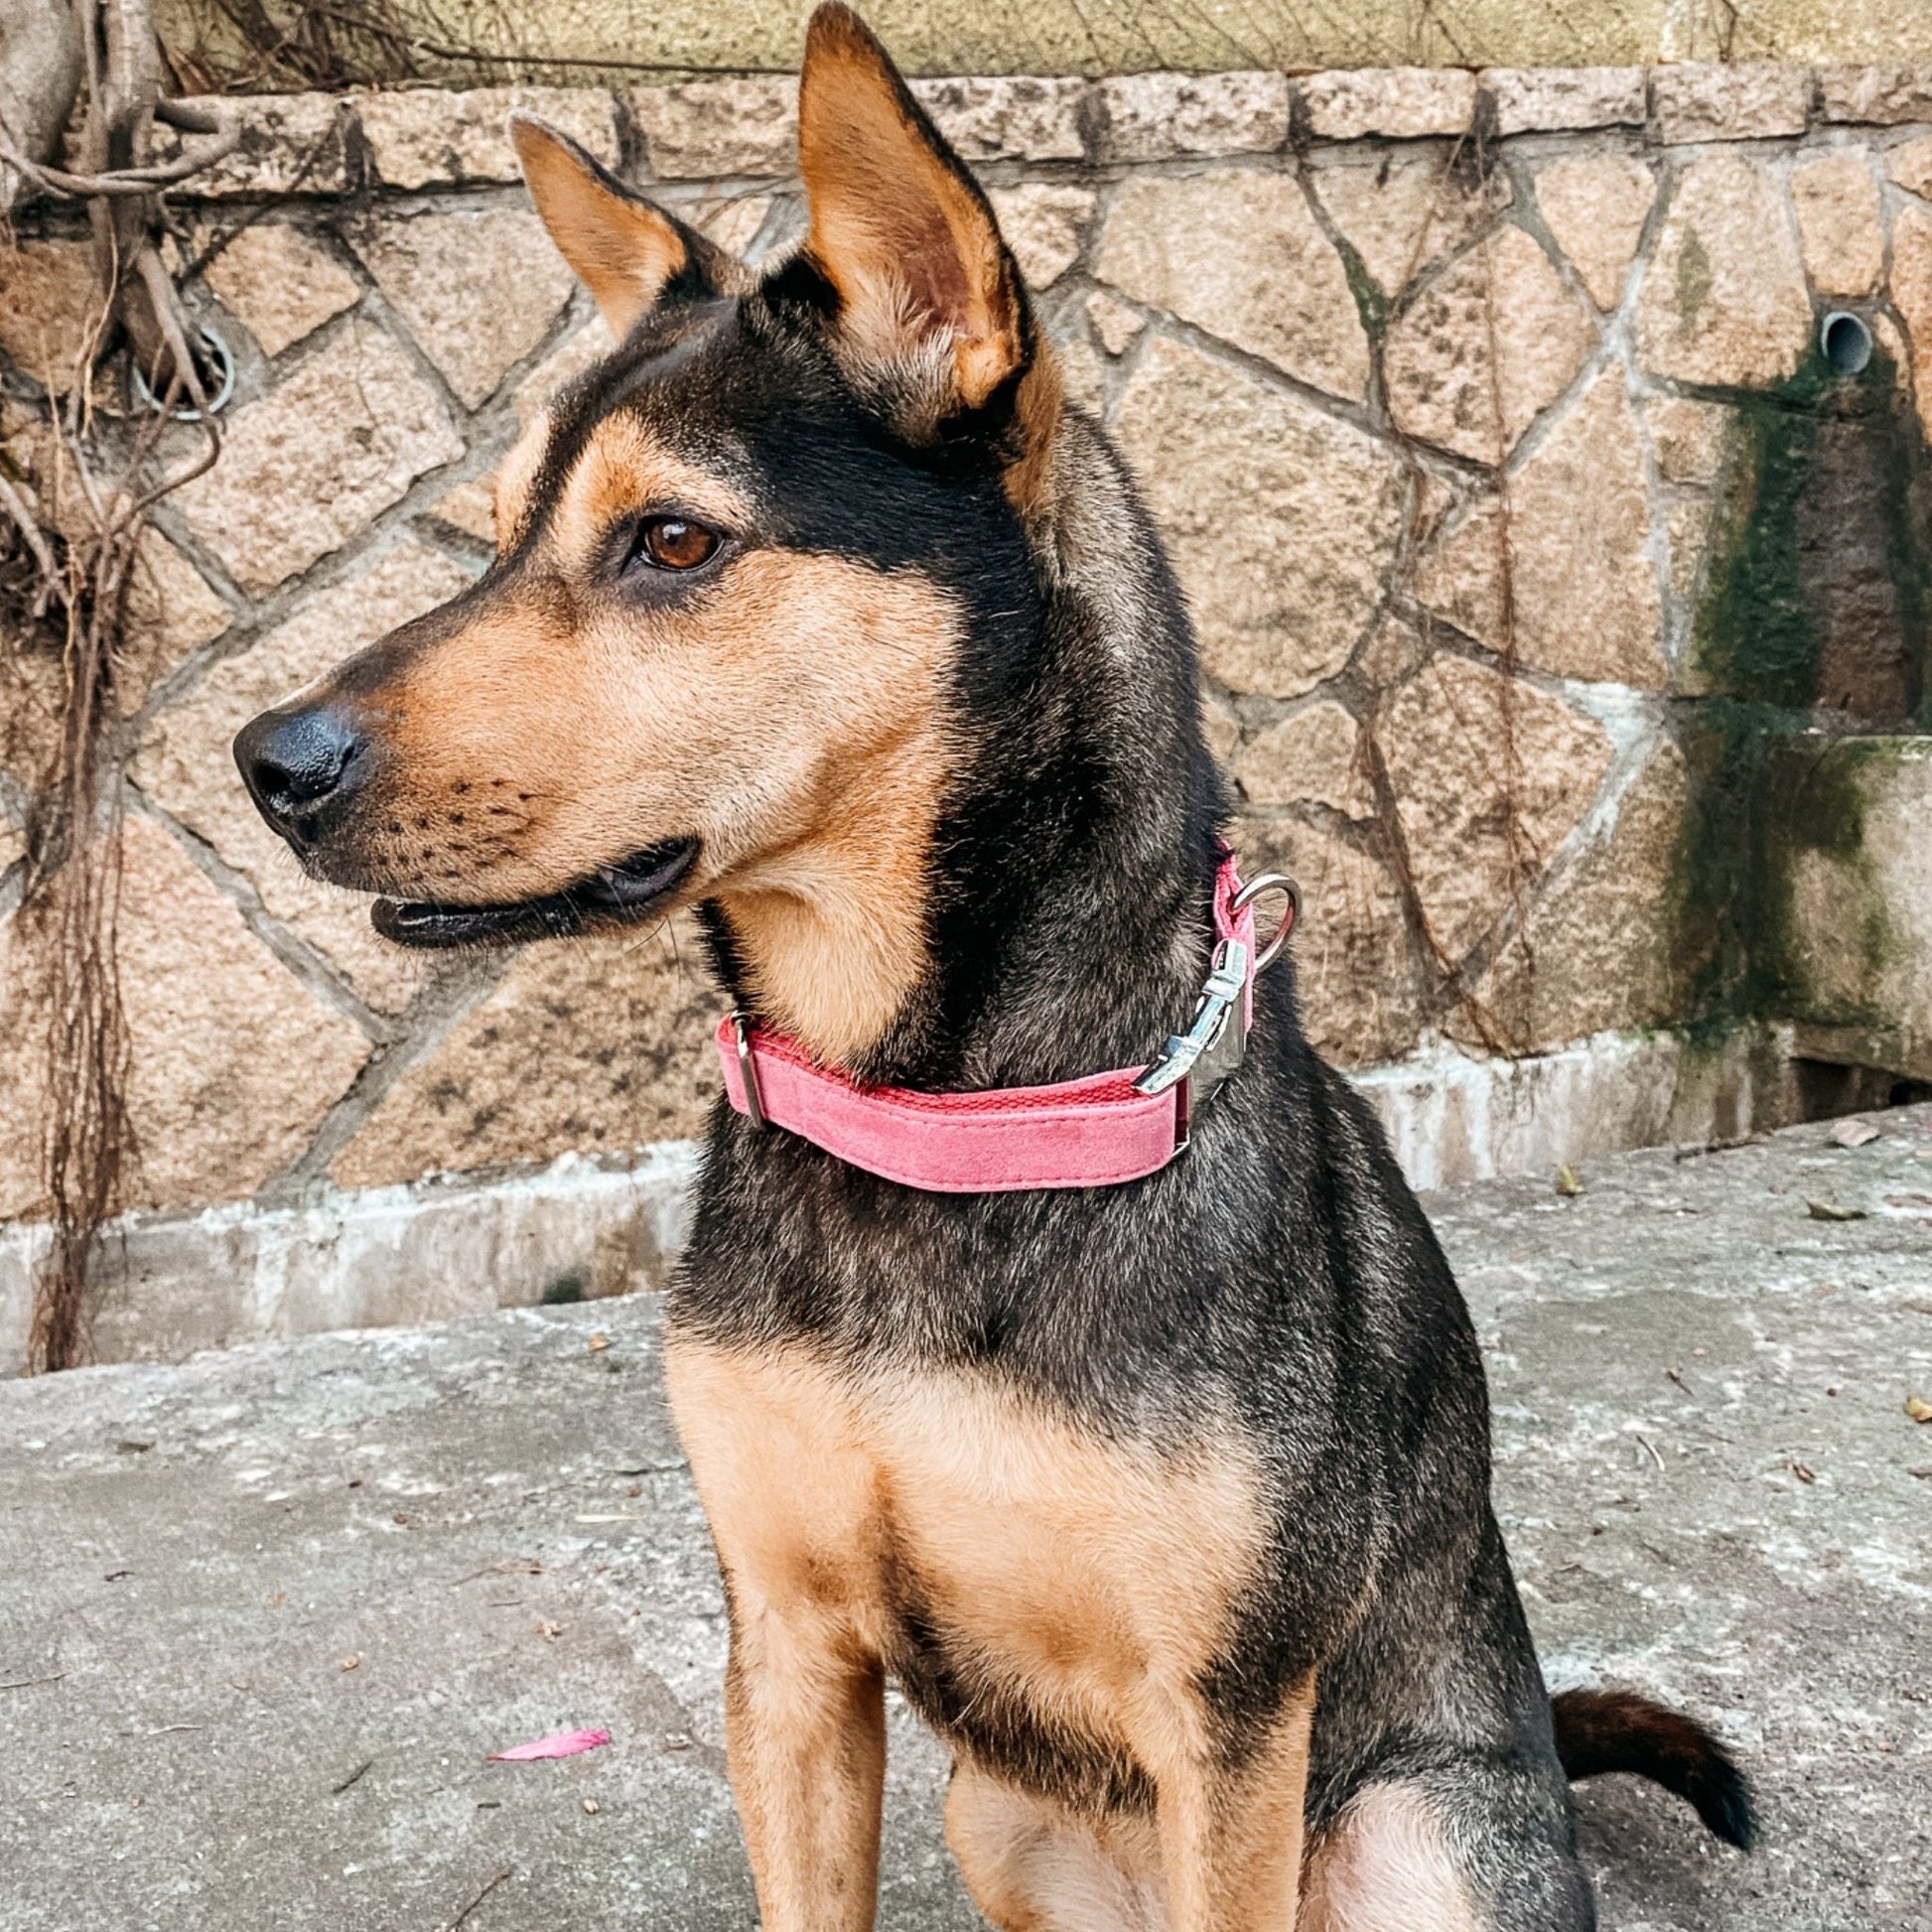 Hot Pink Engraved Dog Collar - Sam and Dot